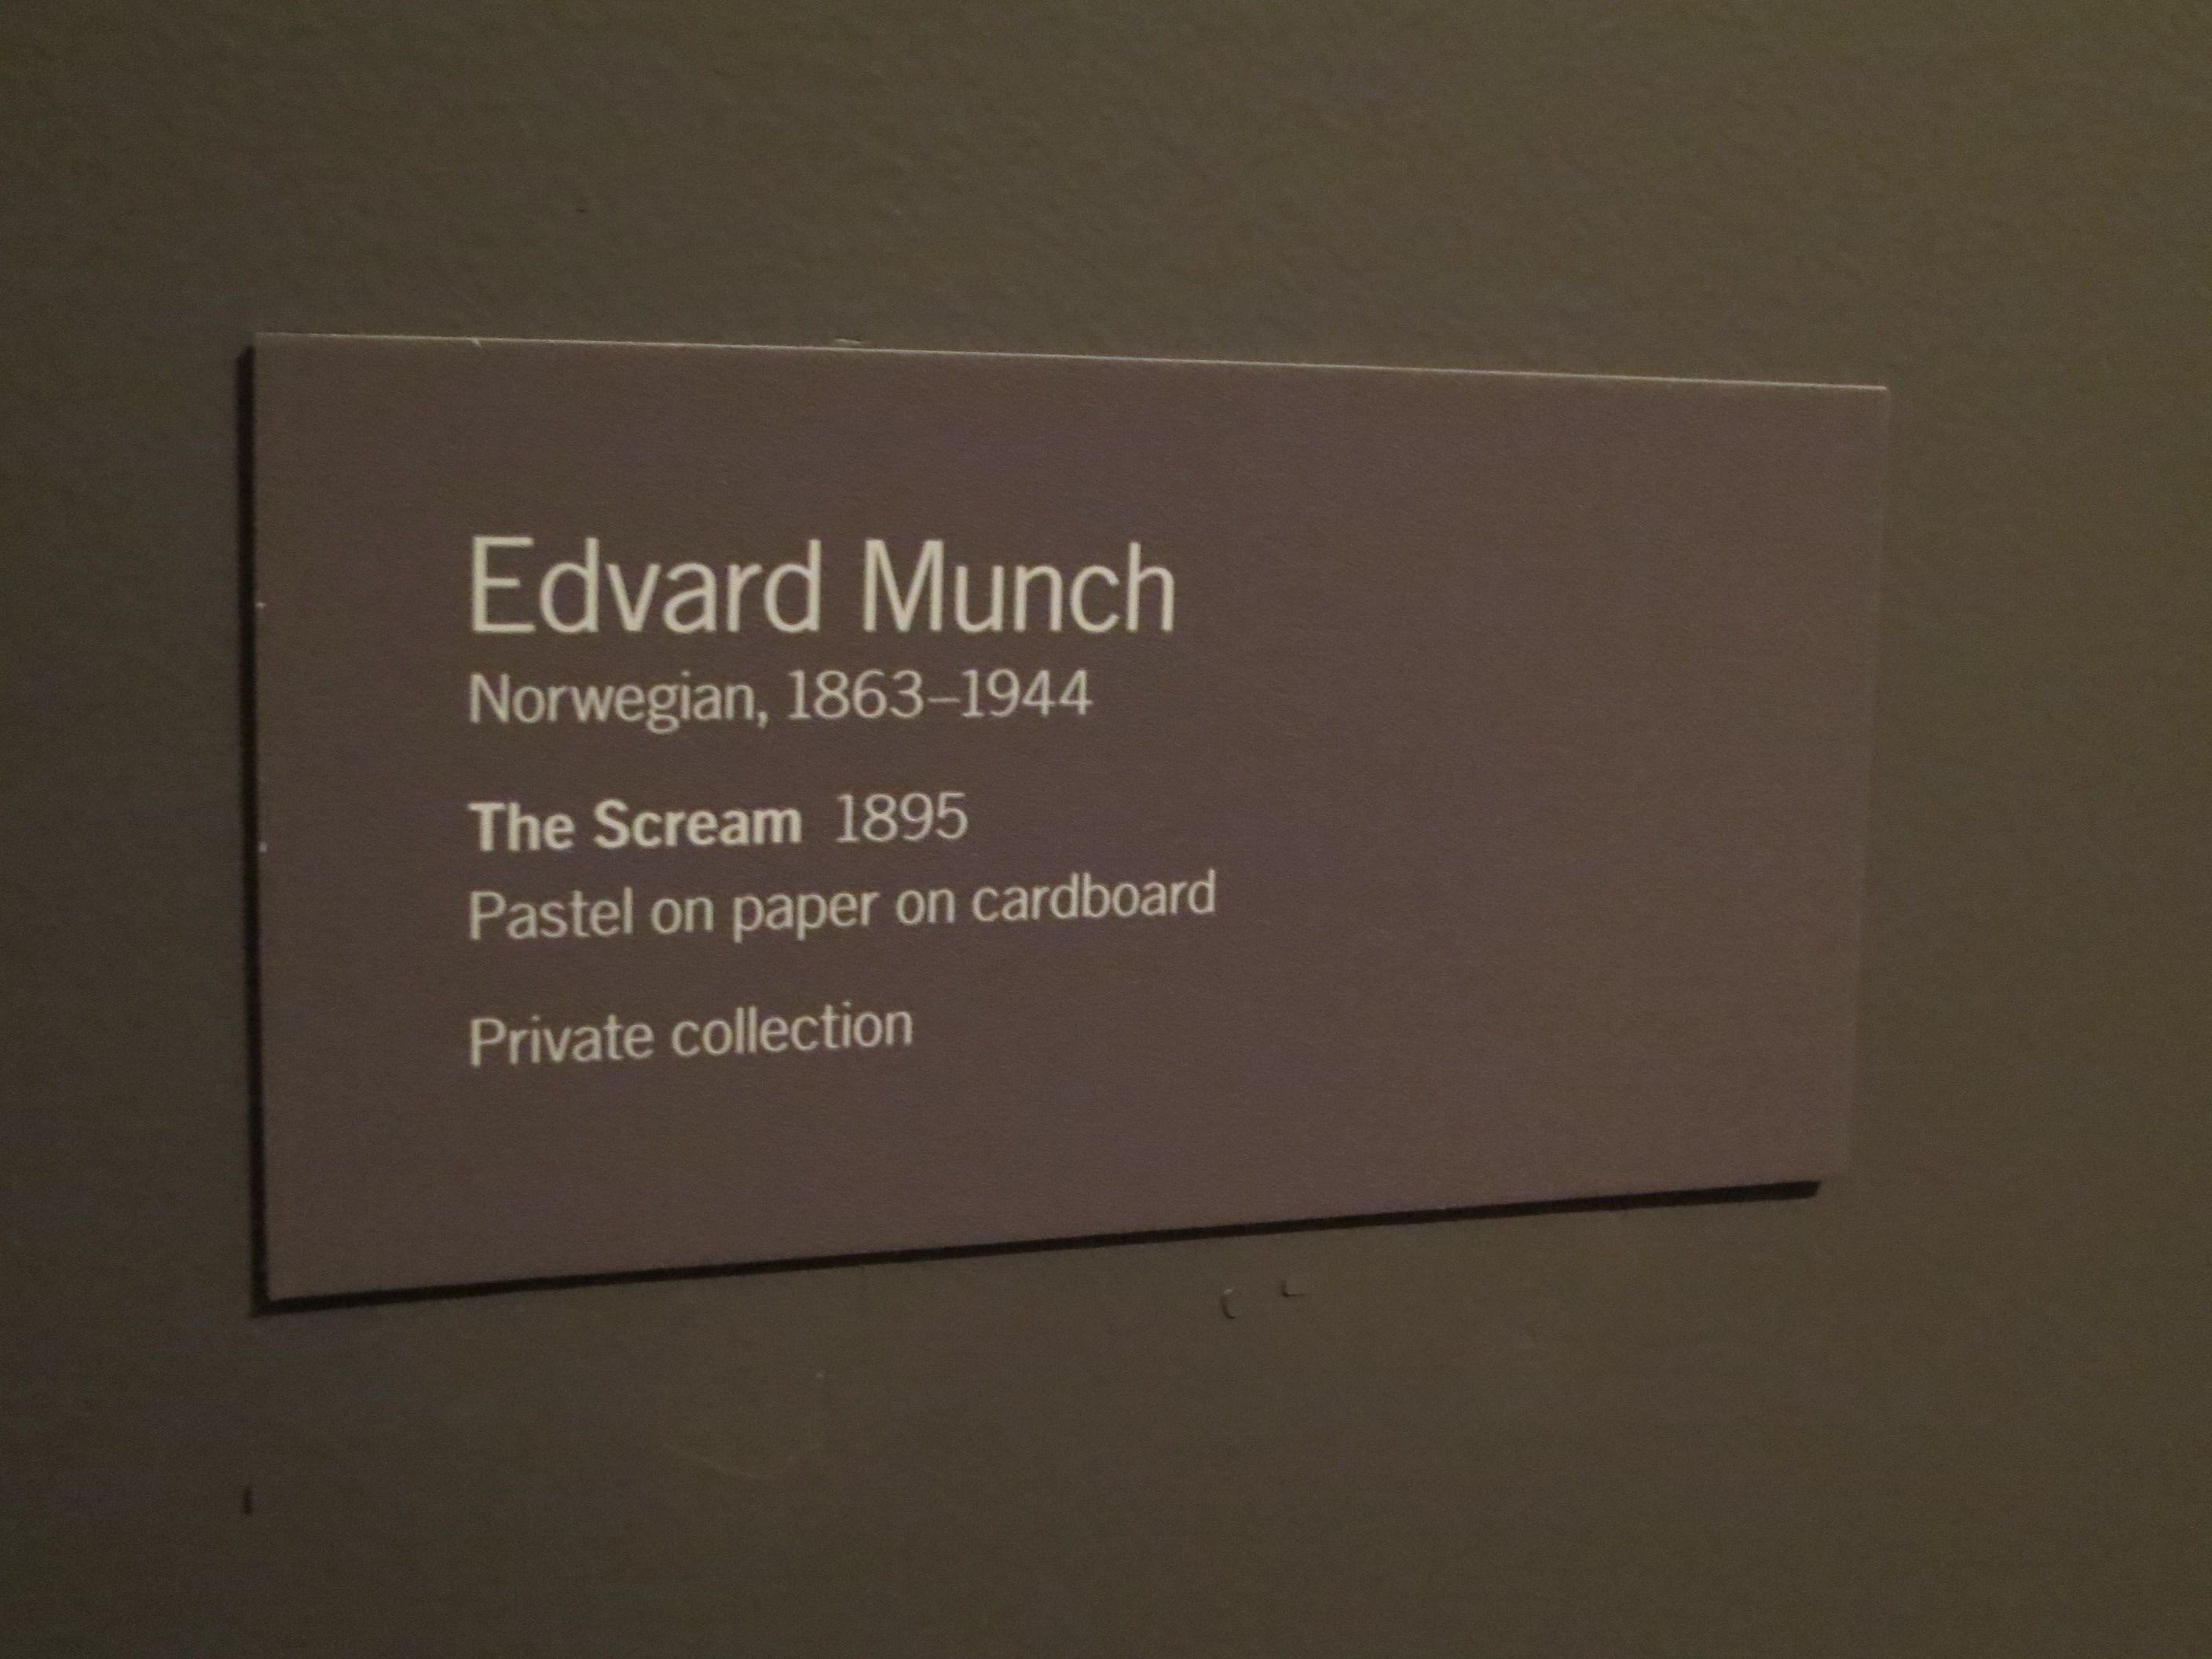 Edvard Munch "The Scream" 1895 Pastel on paper on